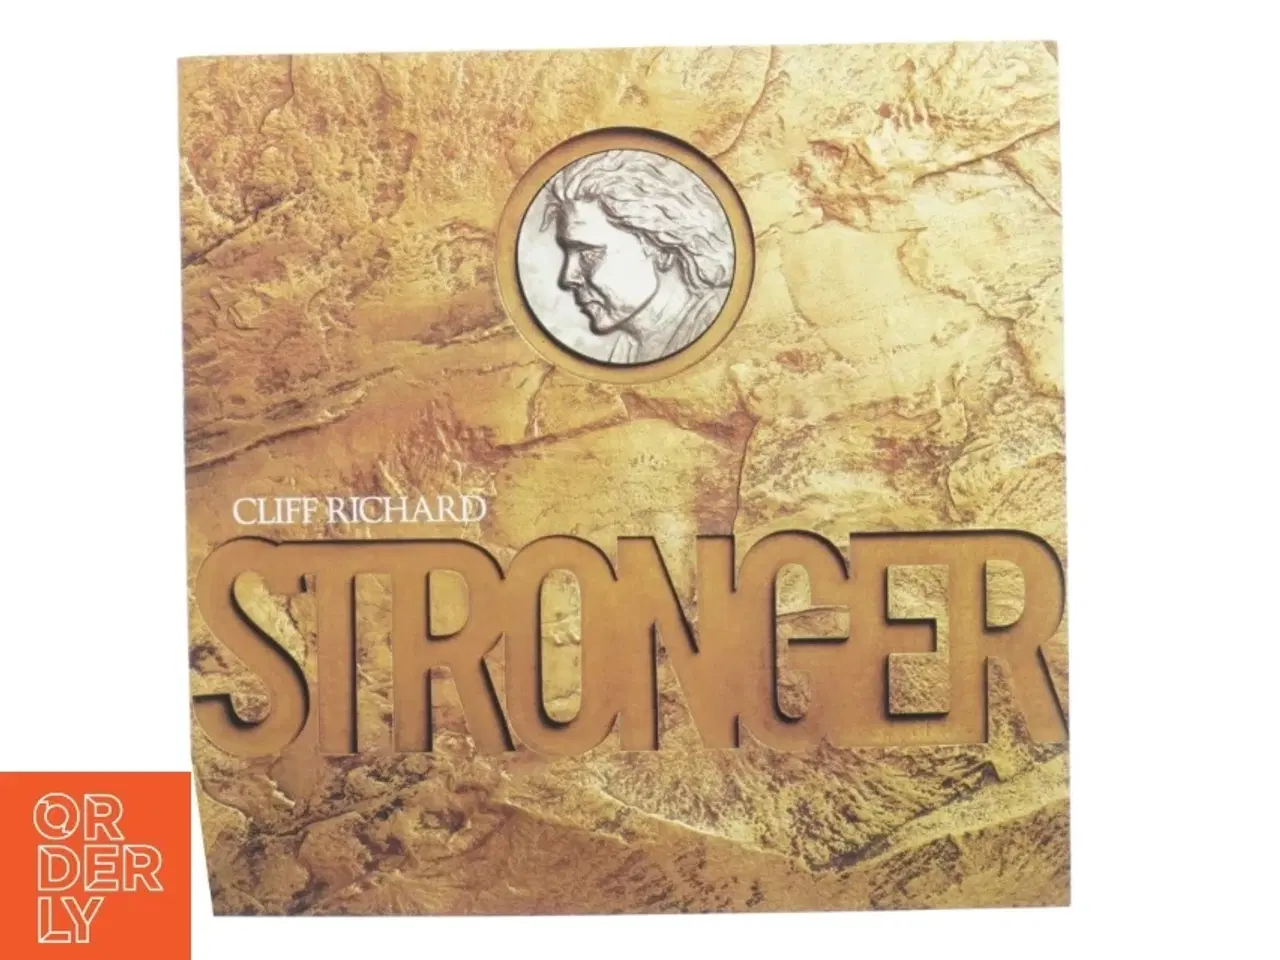 Billede 1 - Cliff Richard, stronger fra Emi (str. 30 cm)